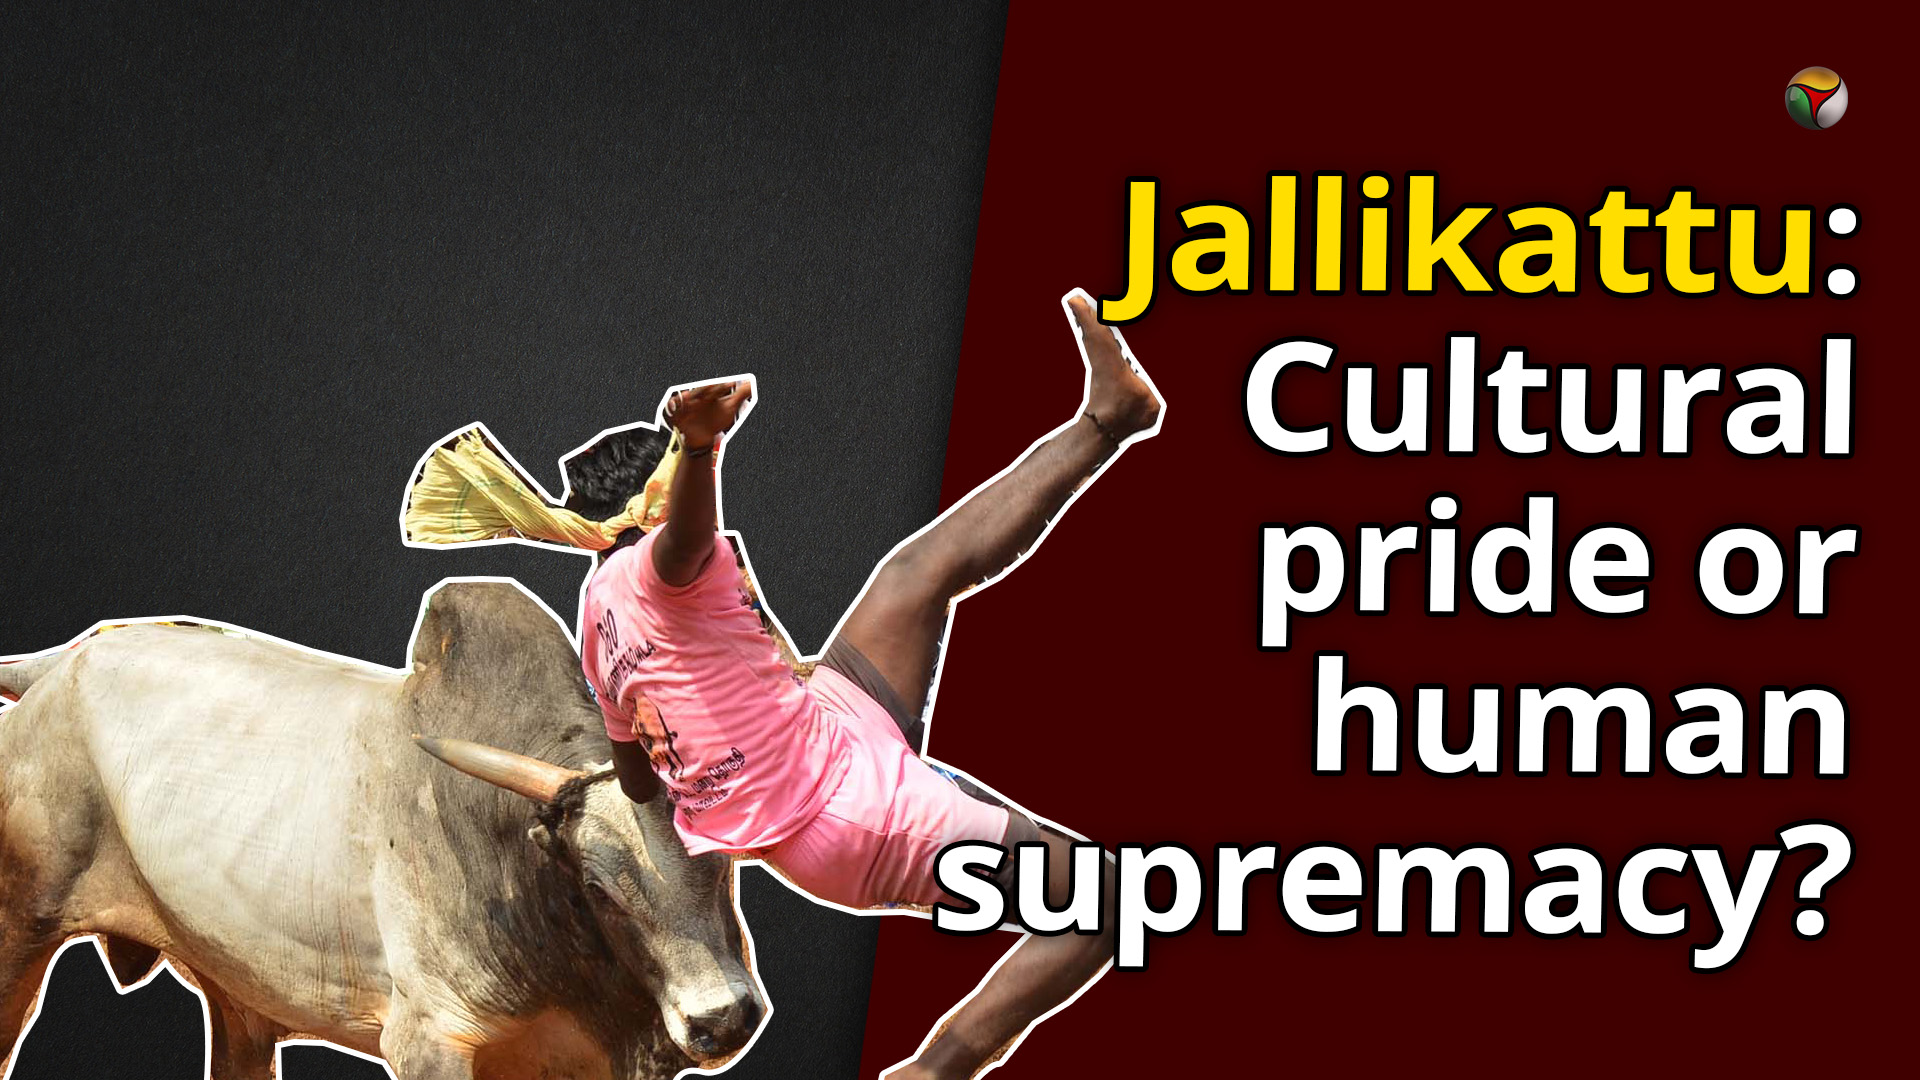 Jallikattu: Cultural pride or human supremacy?